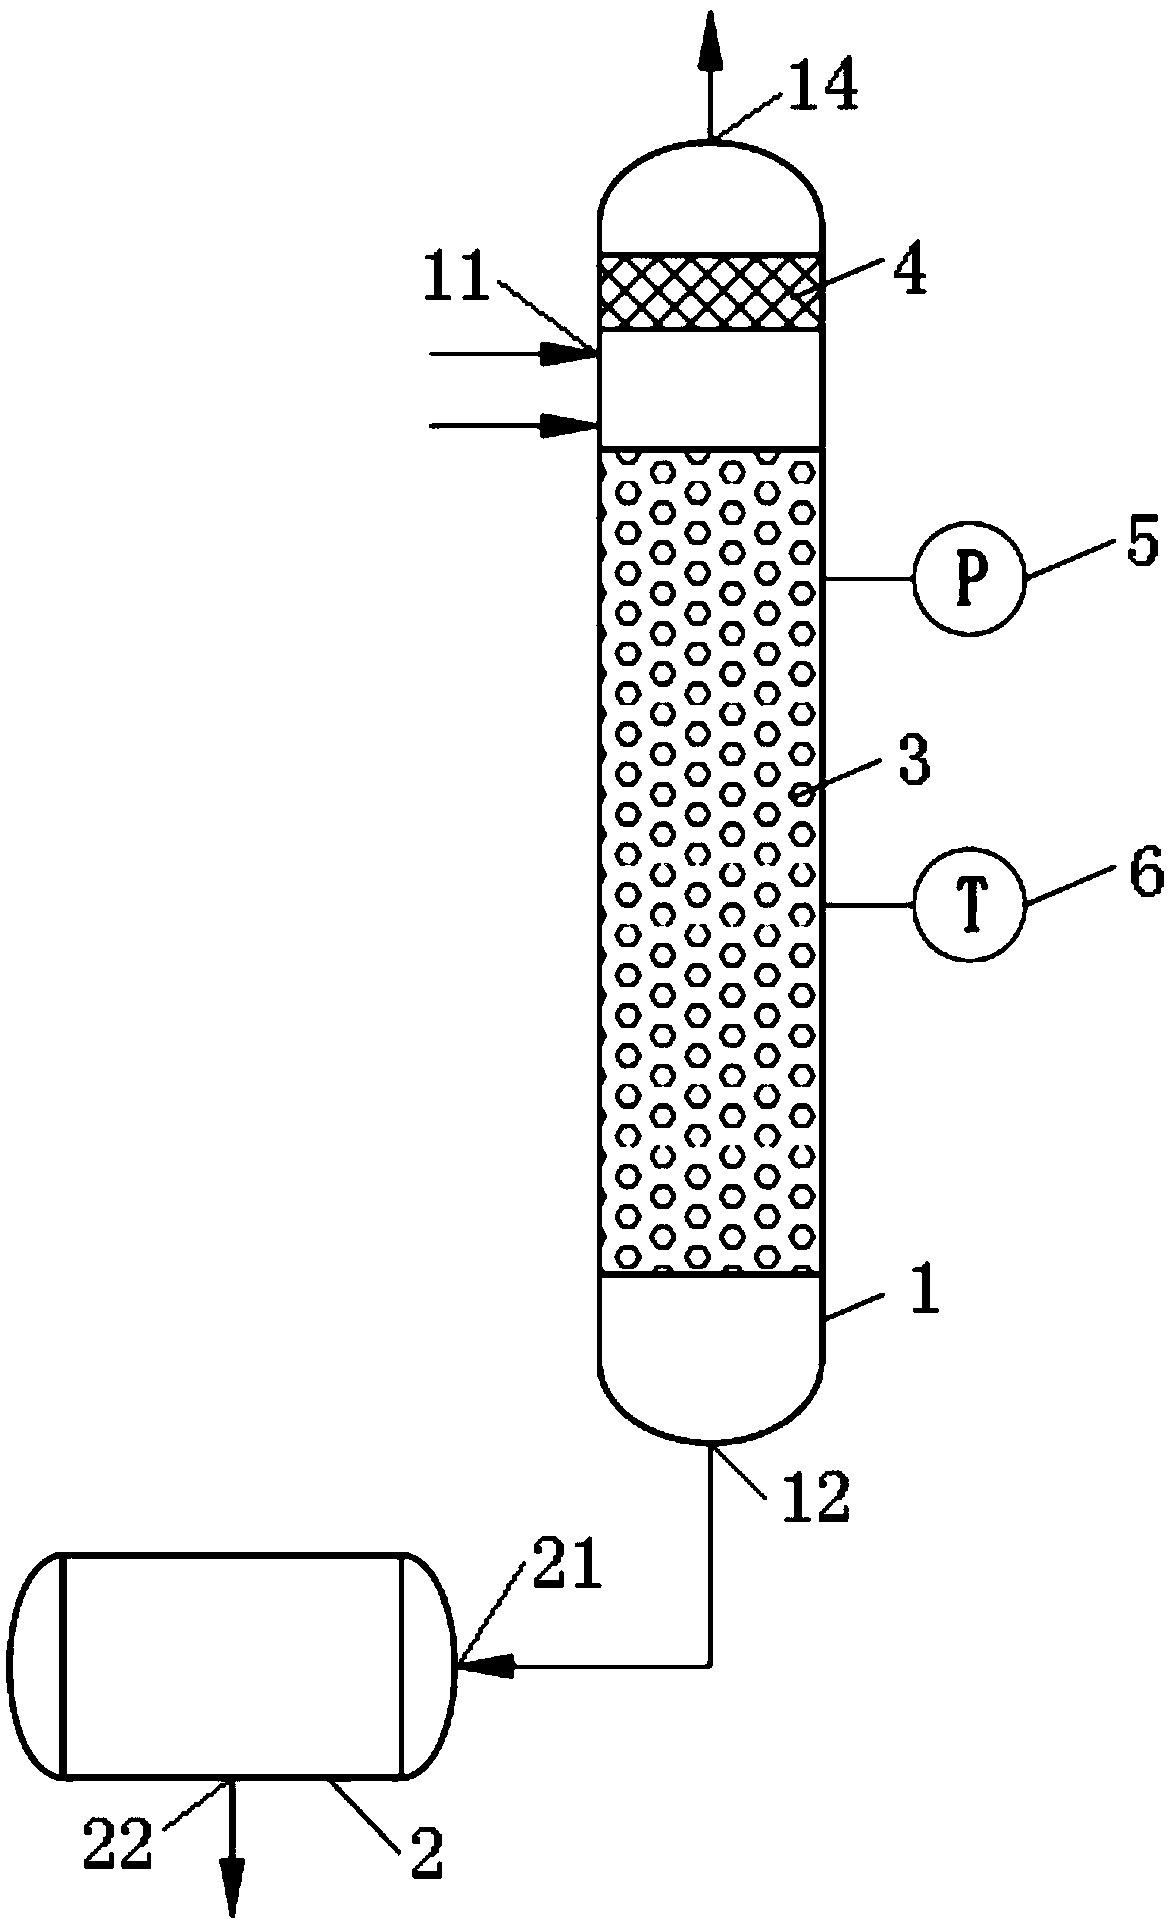 Preparation method and device of nitrogen oxide